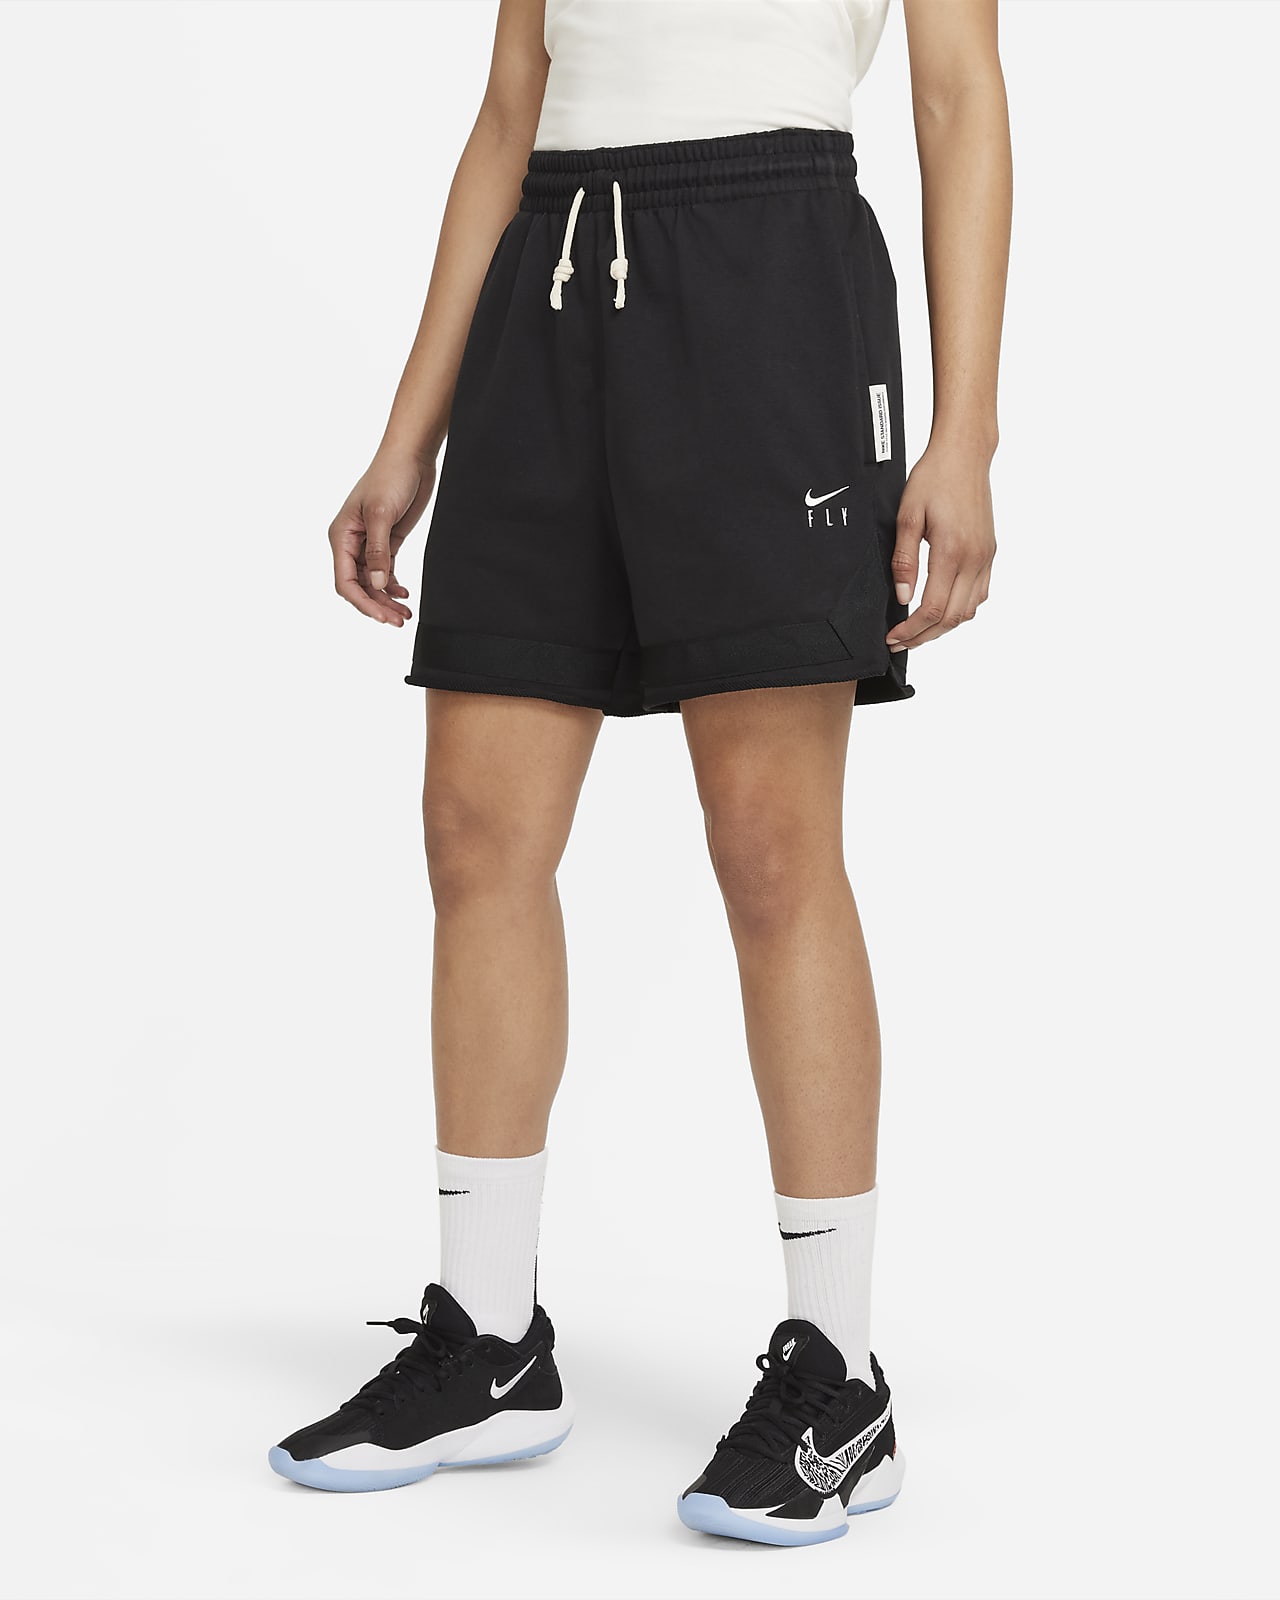 womens basketball shorts